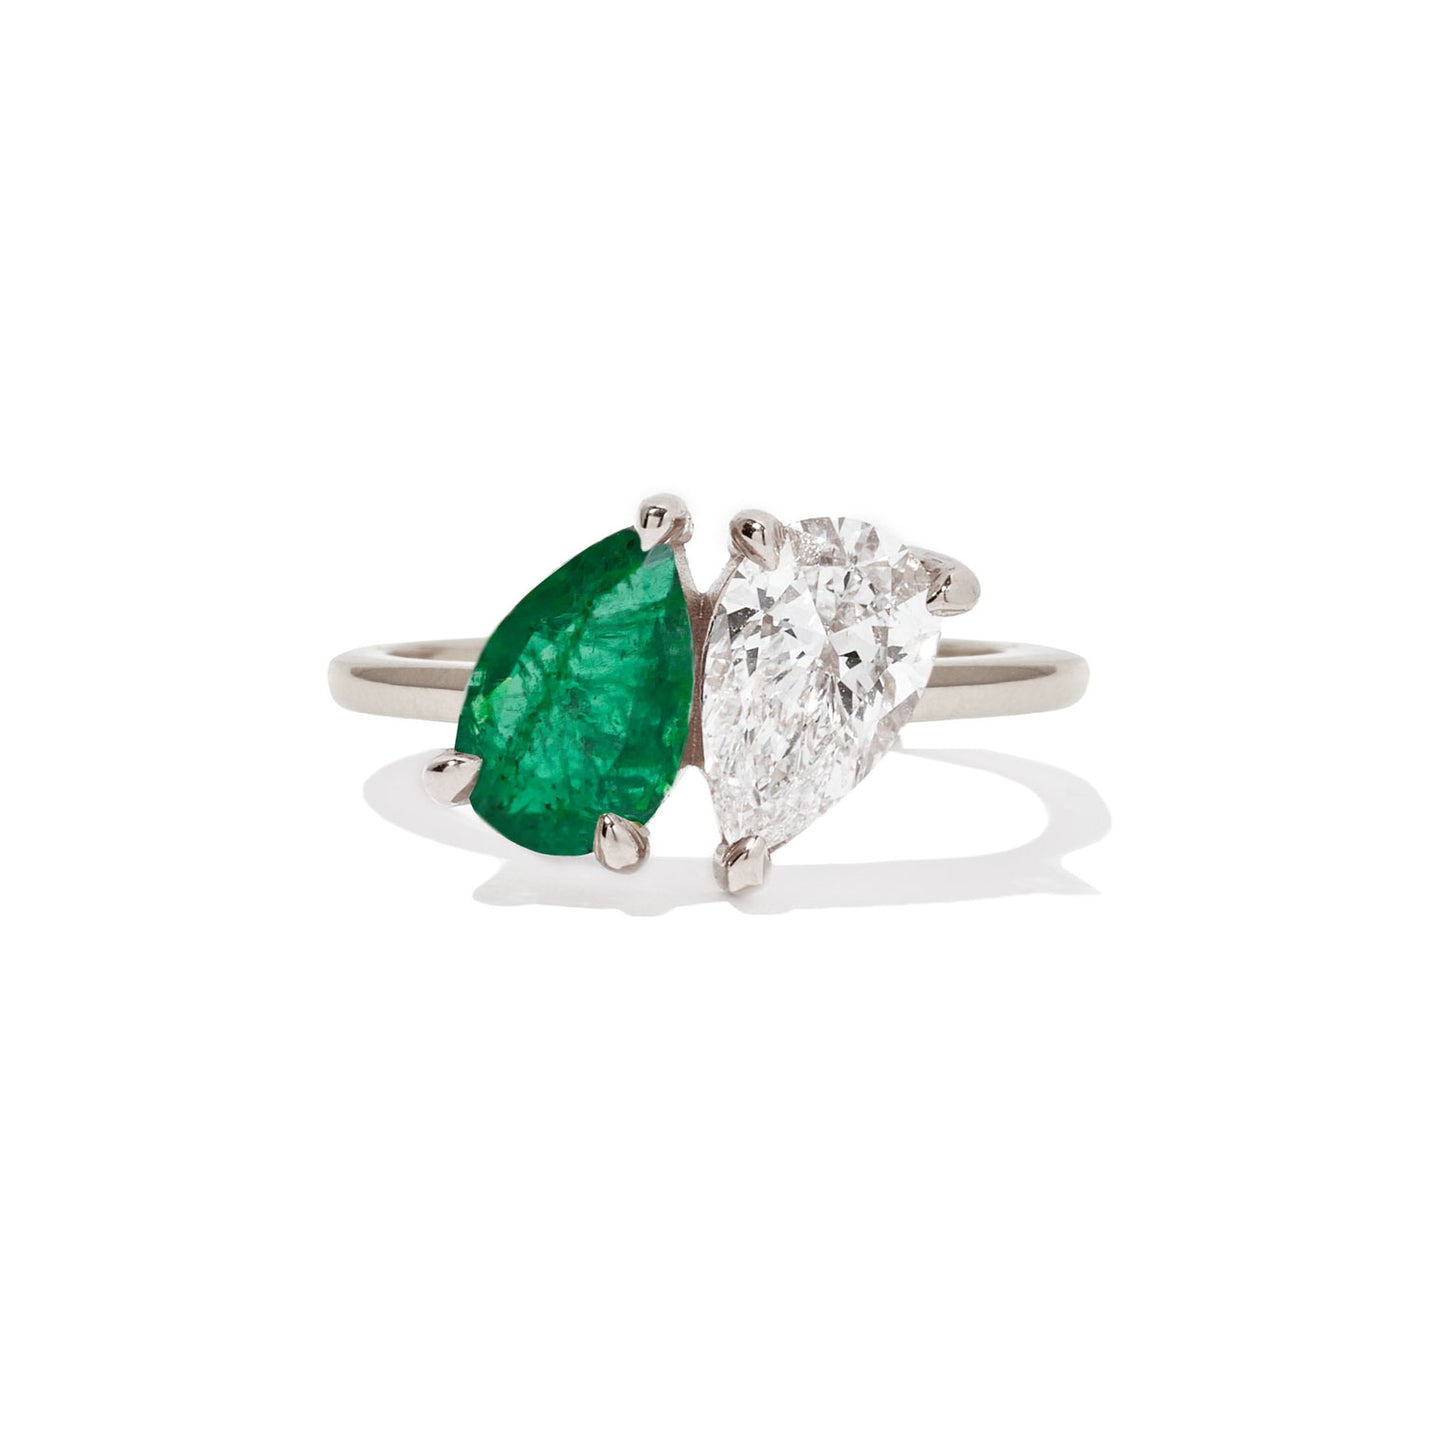 Catbird Gillian Conroy Pear with Emerald